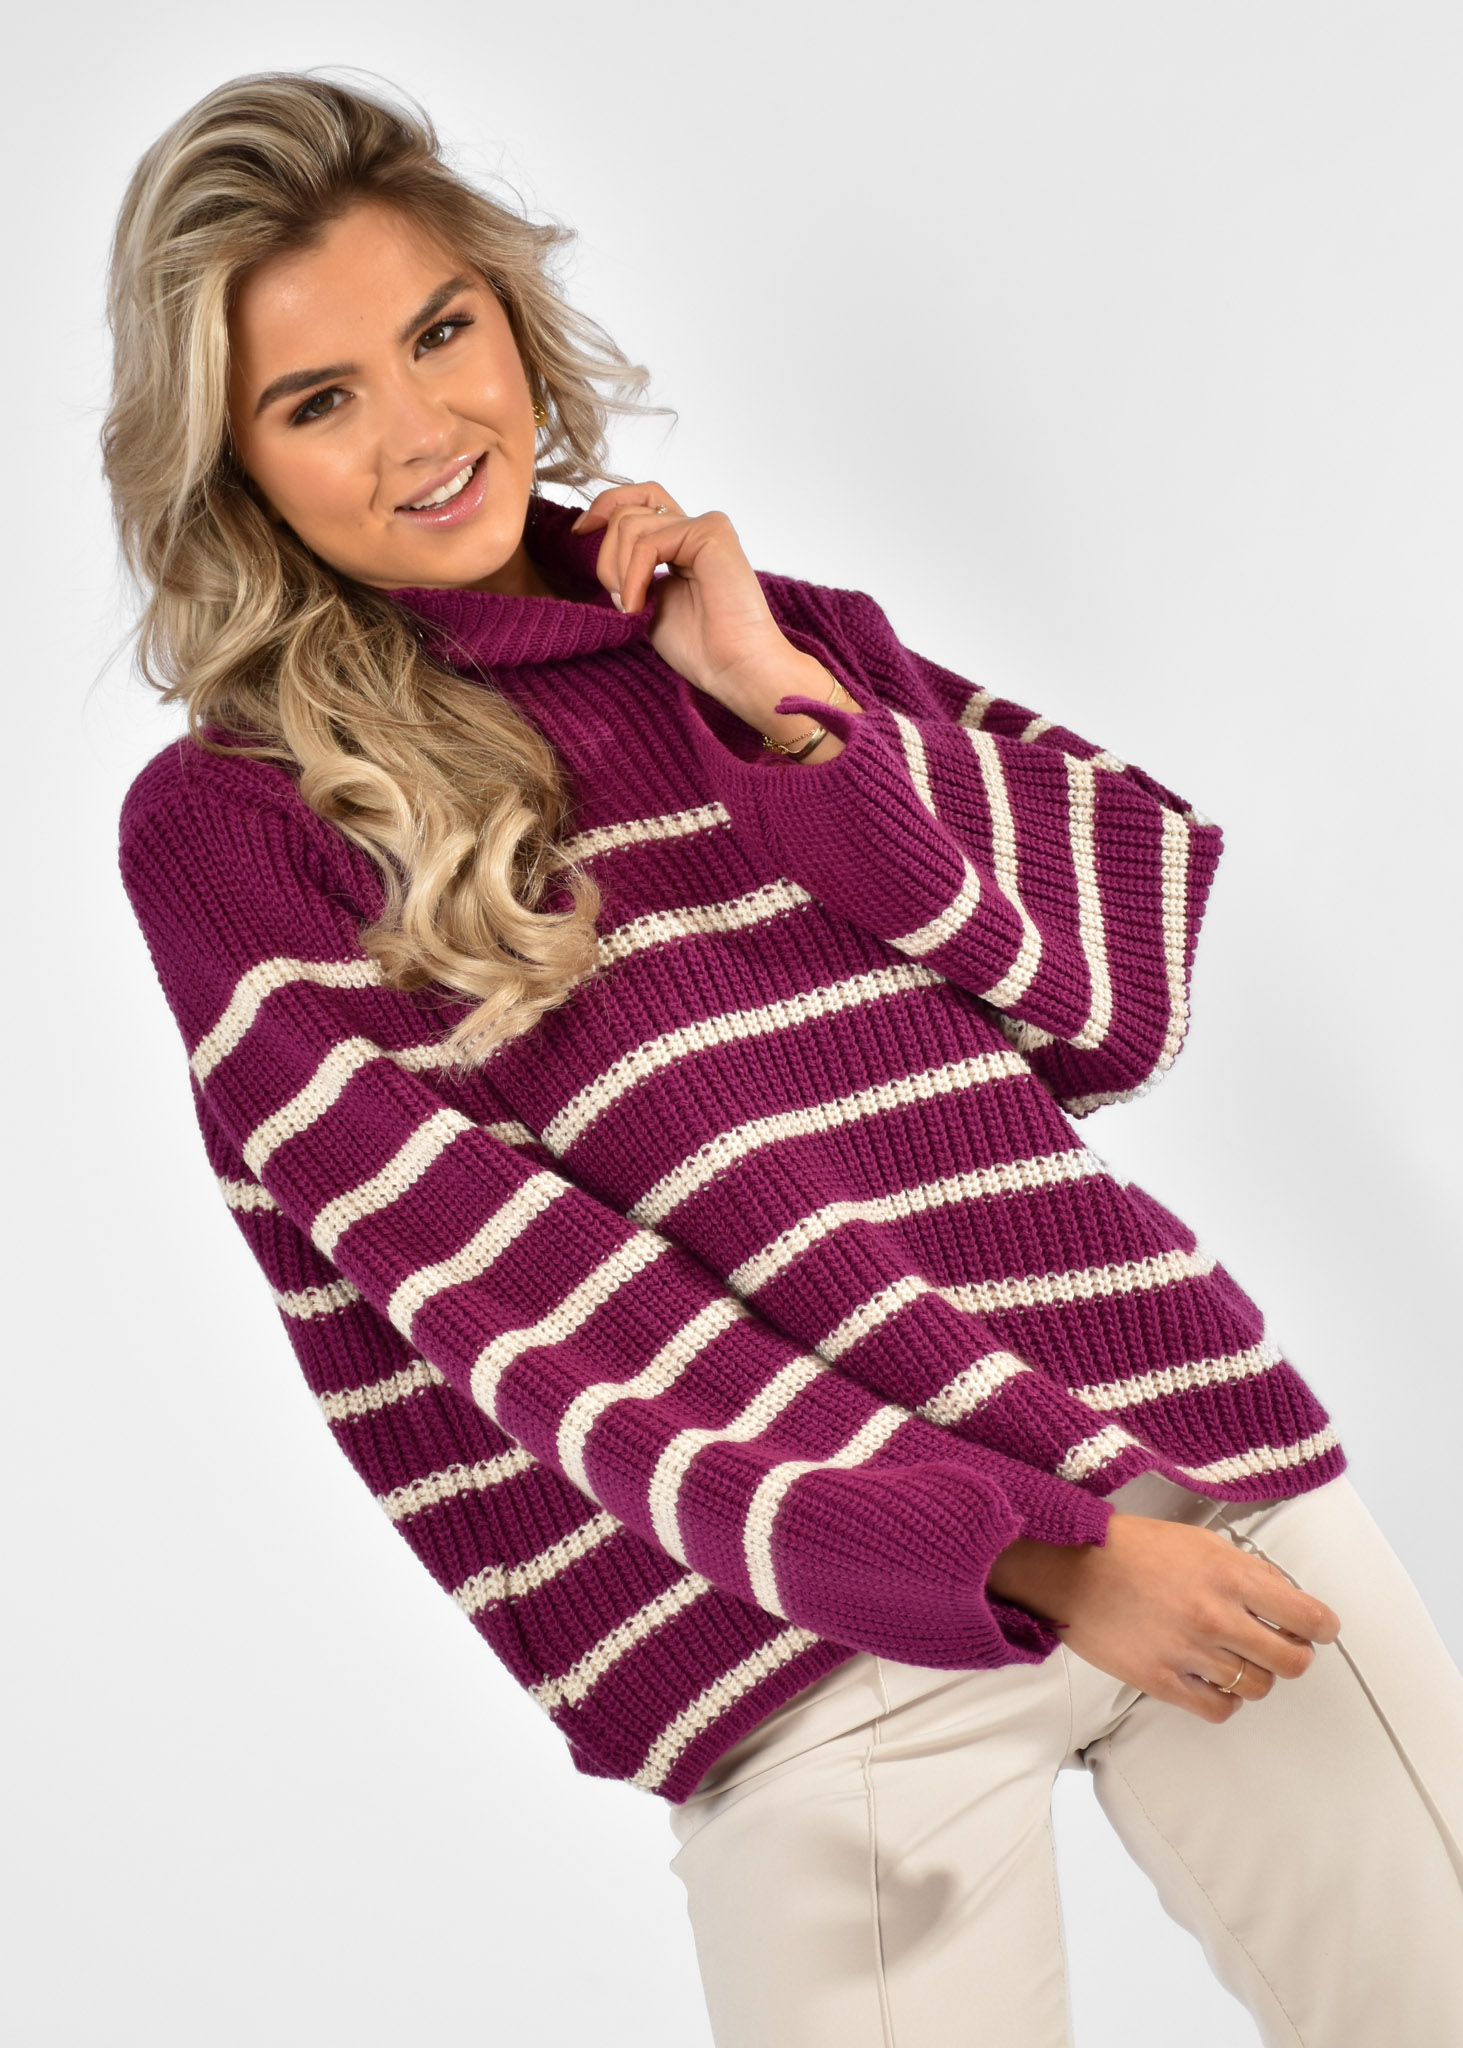 escaleren Onderhandelen Vochtigheid Gestreepte paarse trui | Truien en knits | tess v